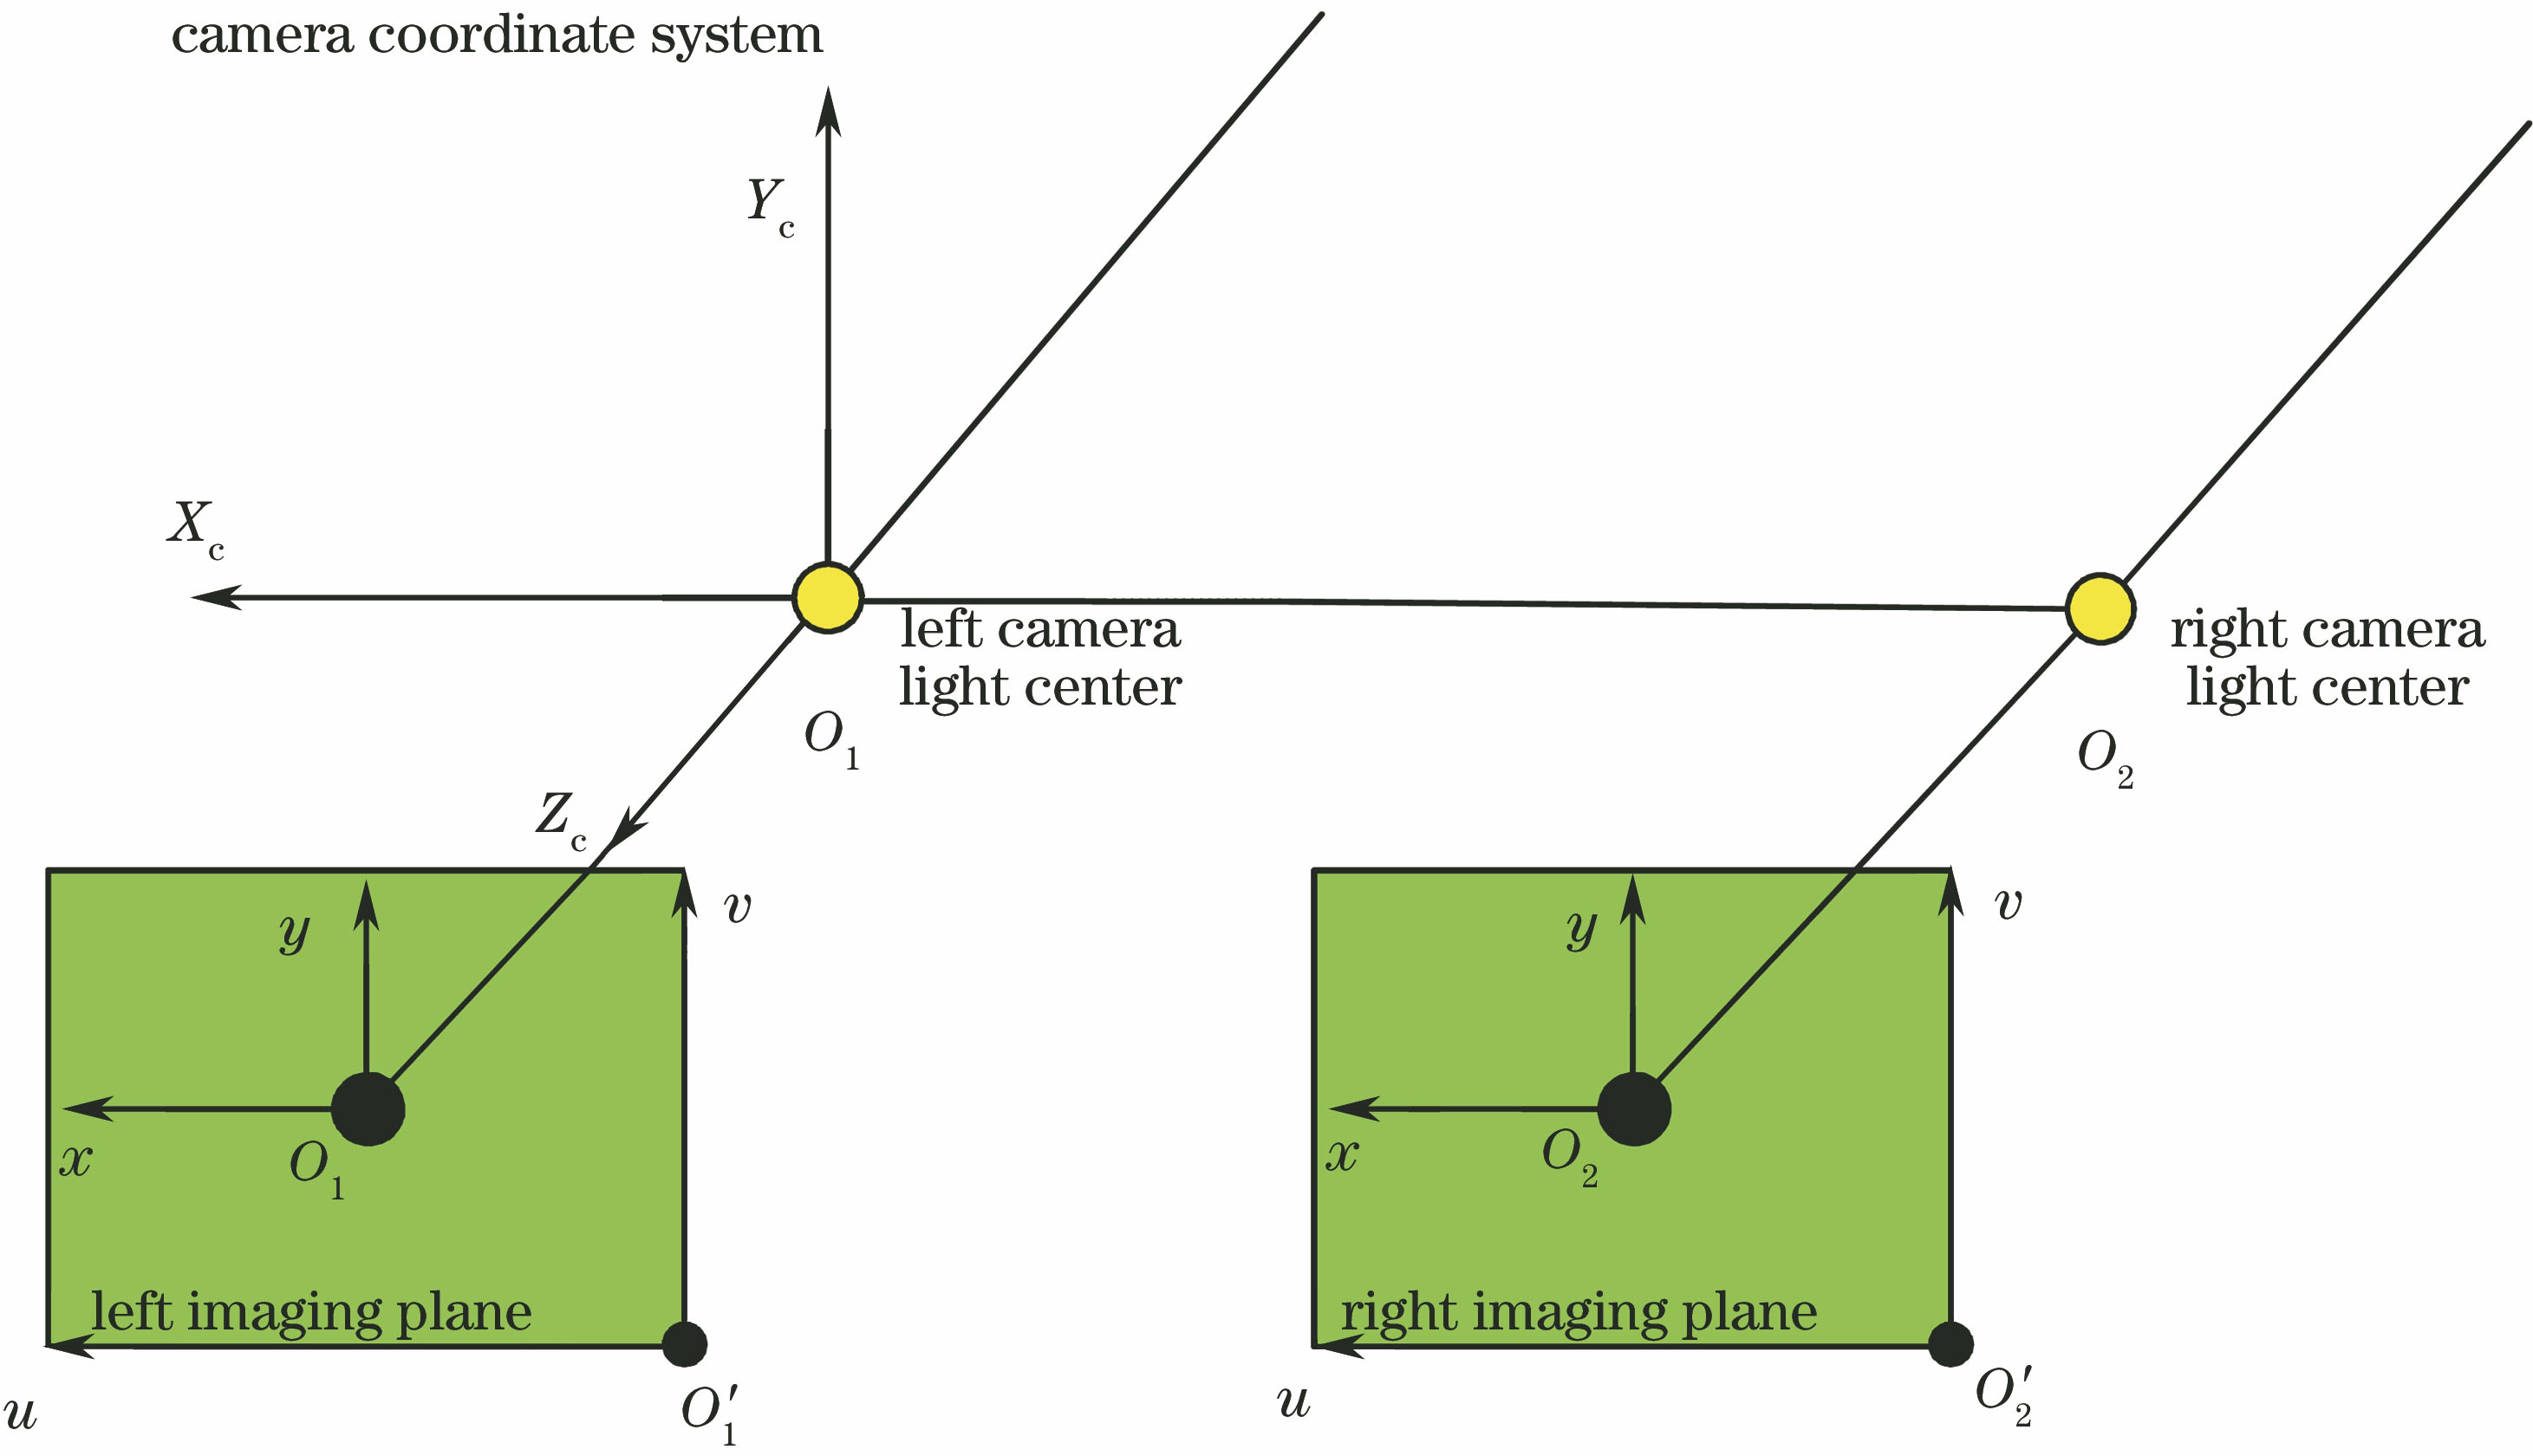 Establishment of camera coordinate system